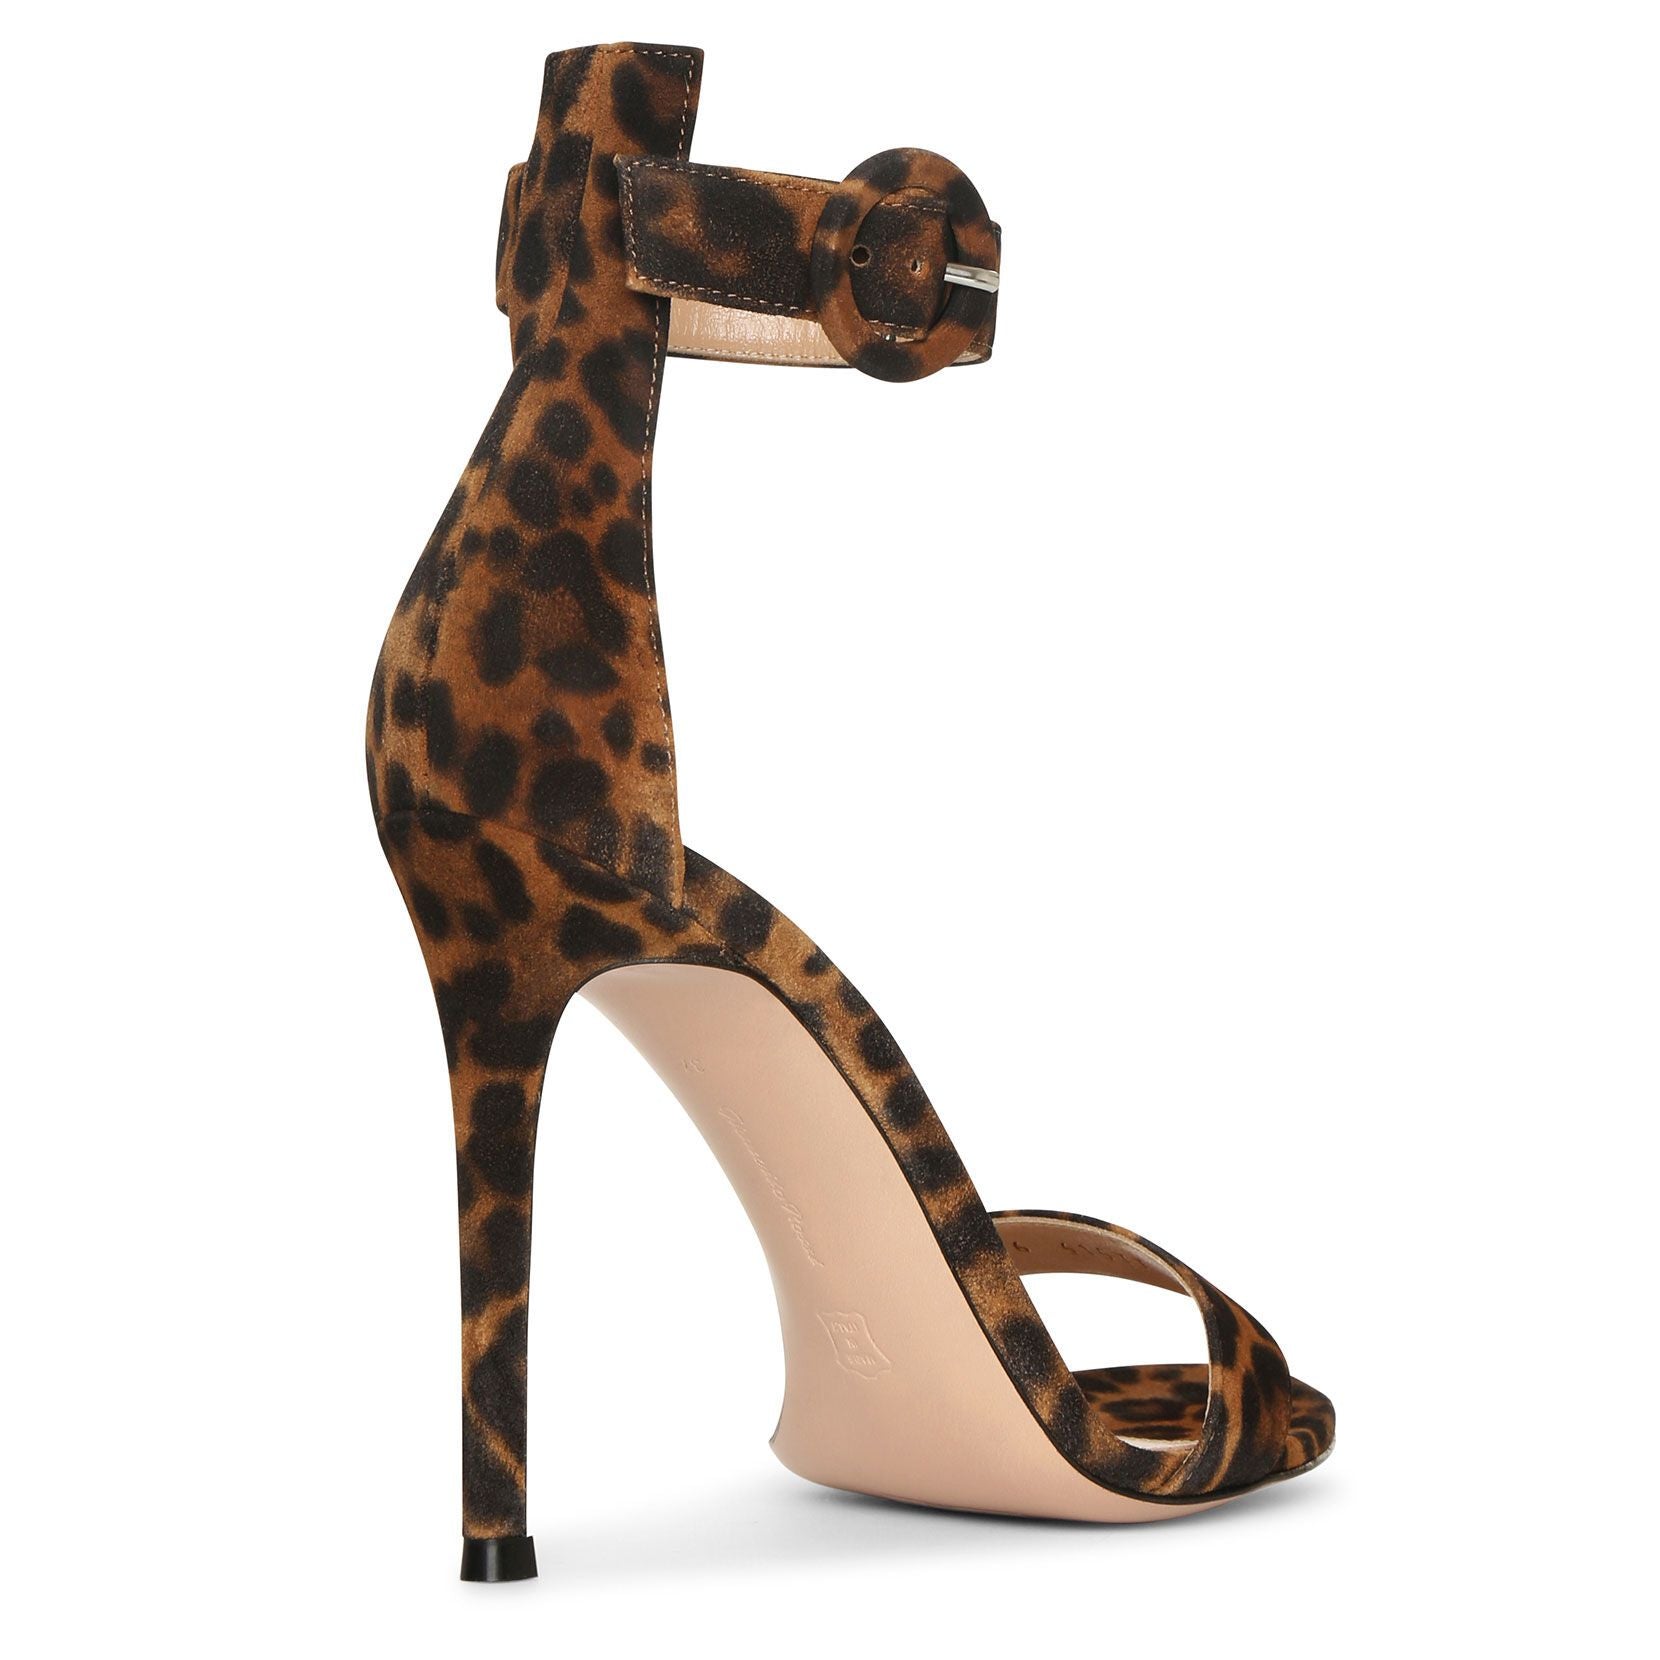 Portofino 105 leopard suede sandals